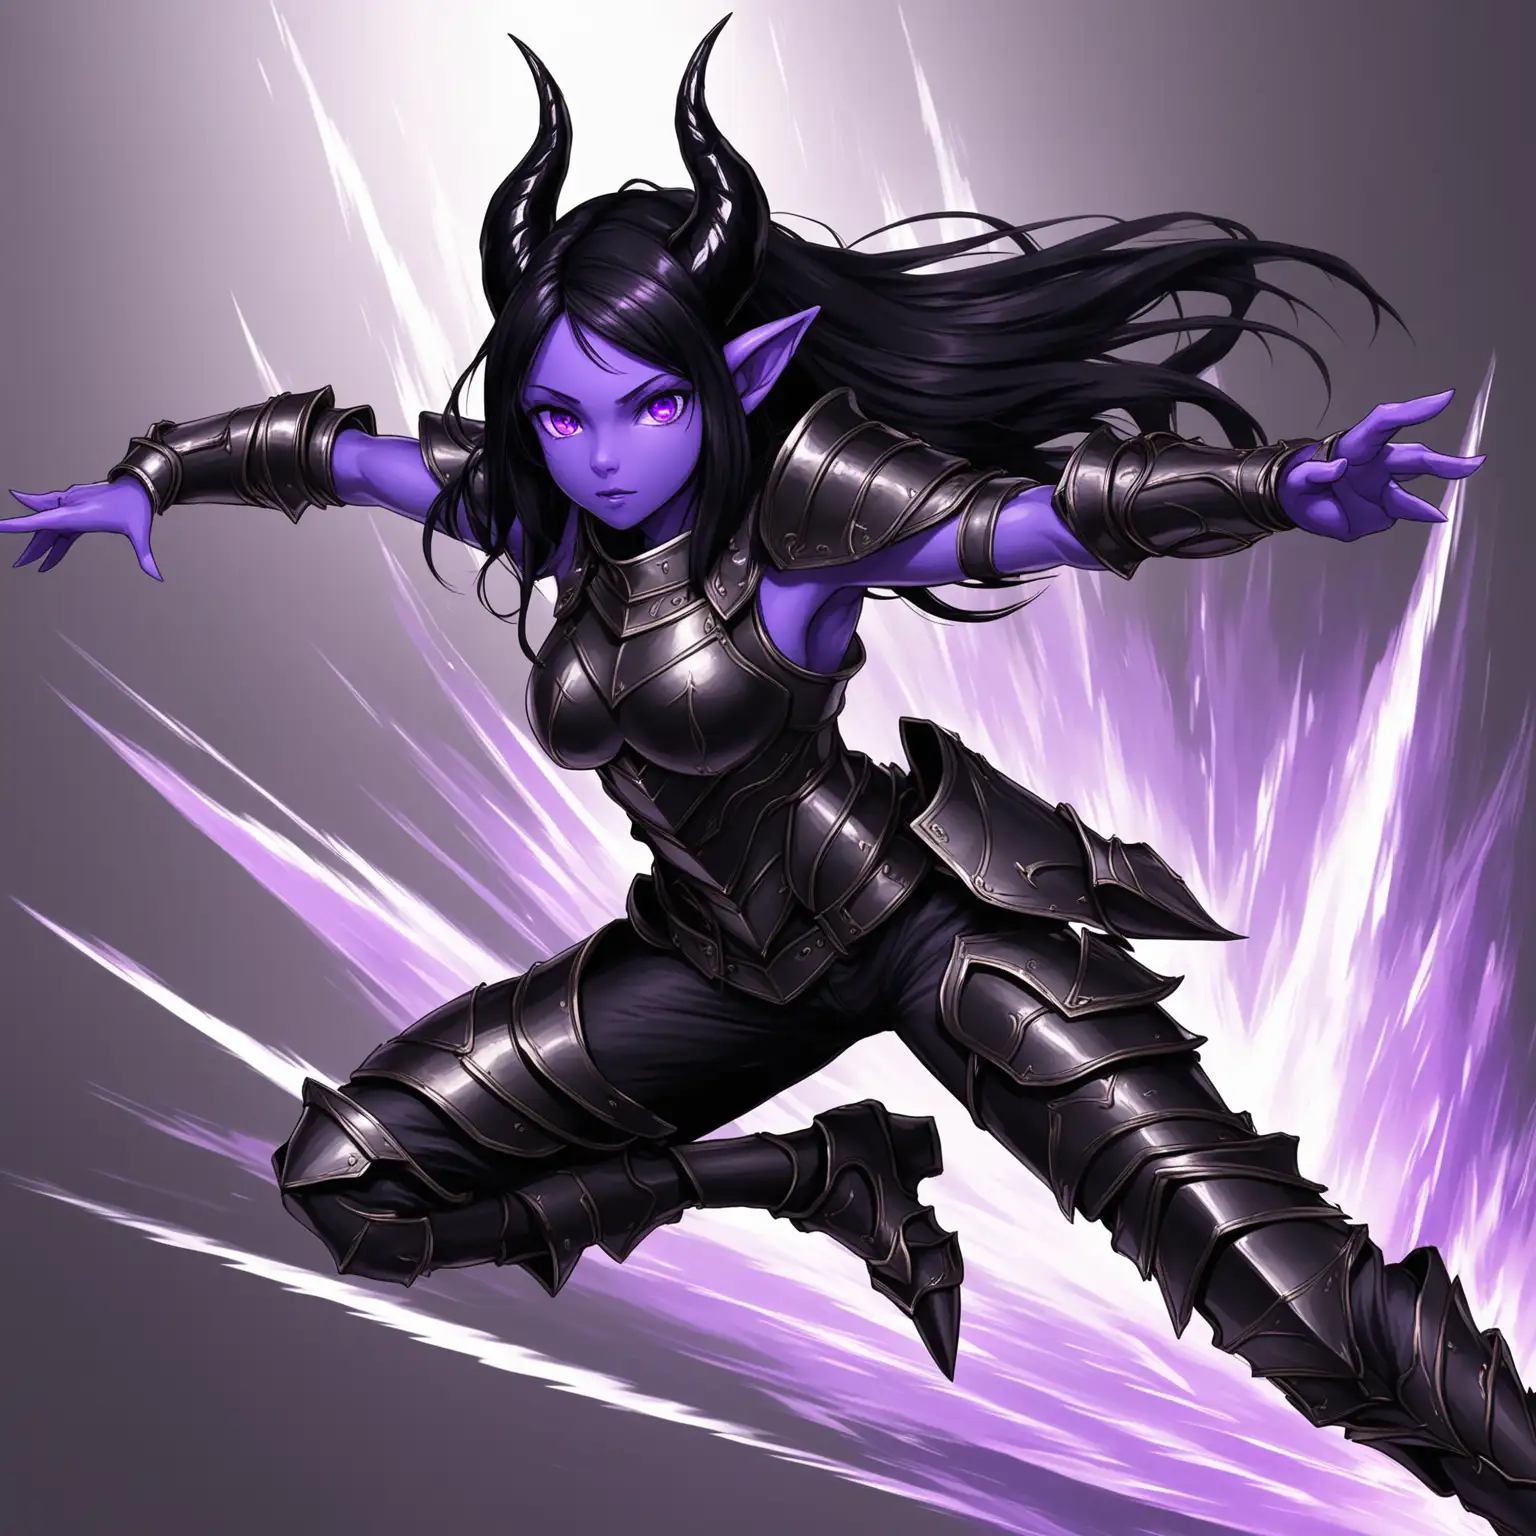 Adventurous PurpleSkinned Girl with Horns in Dynamic Pose